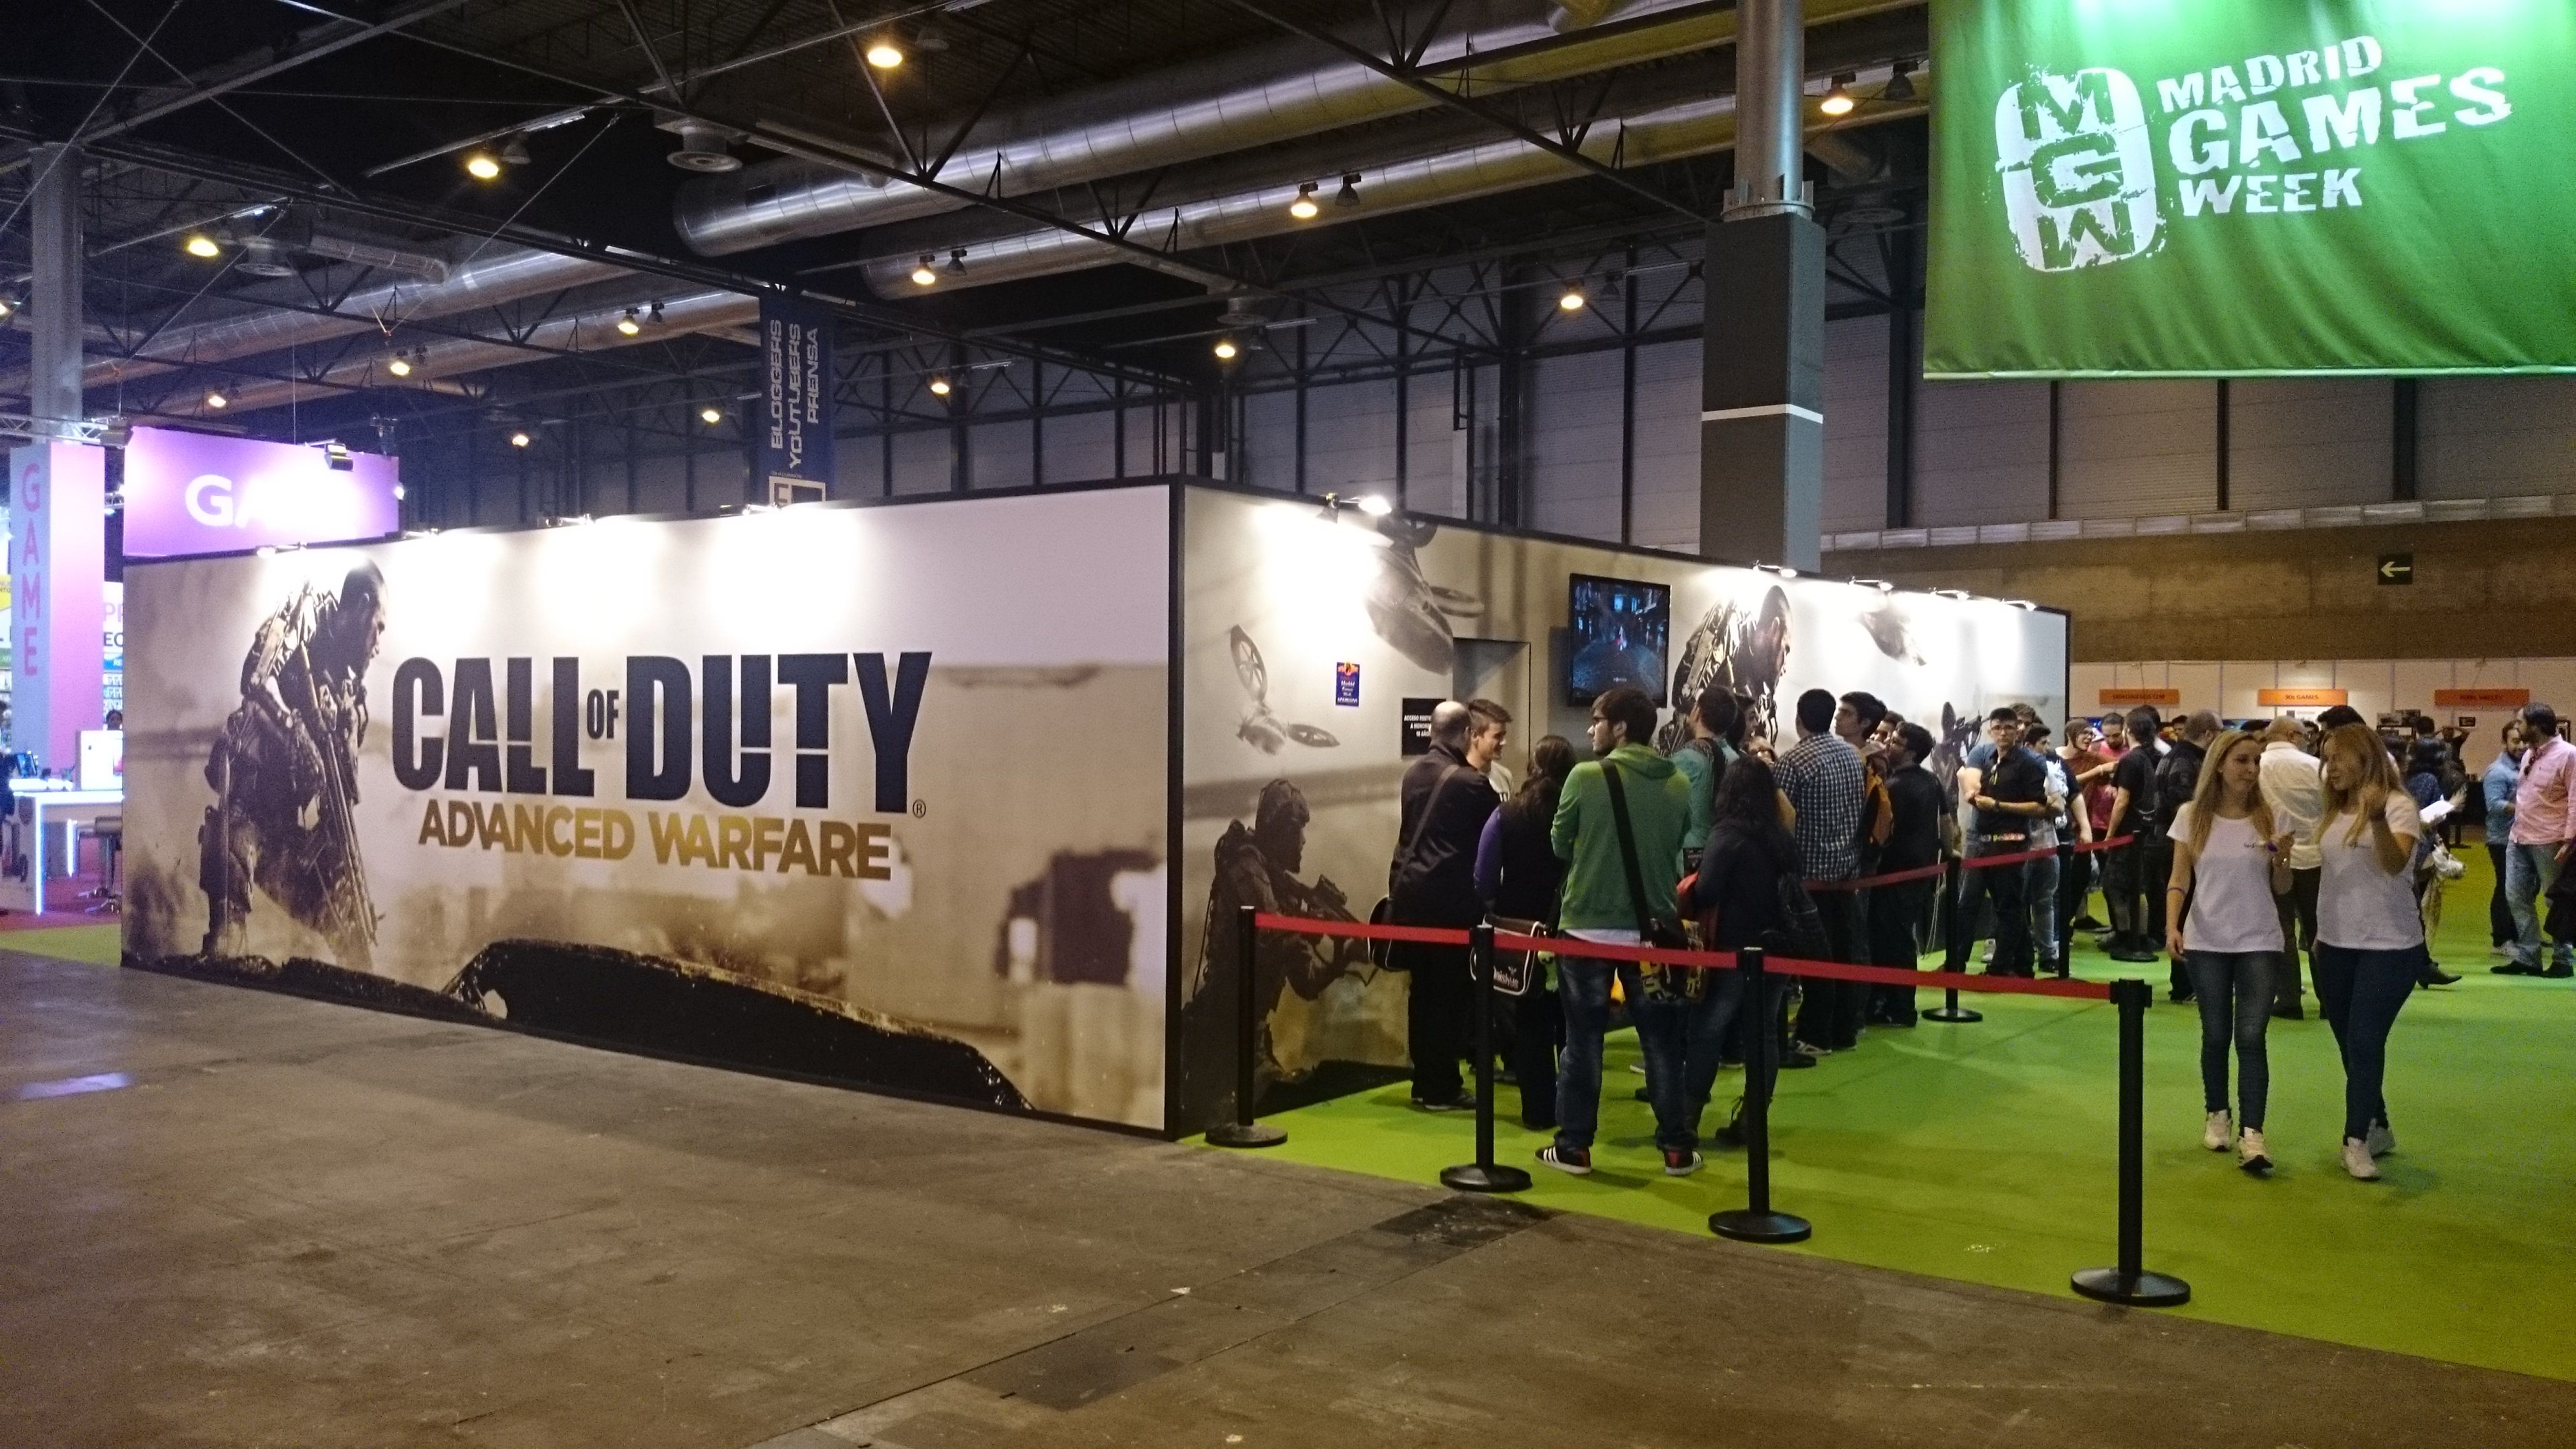 Madrid Games Week 2014: Call of Duty Advanced Warfare